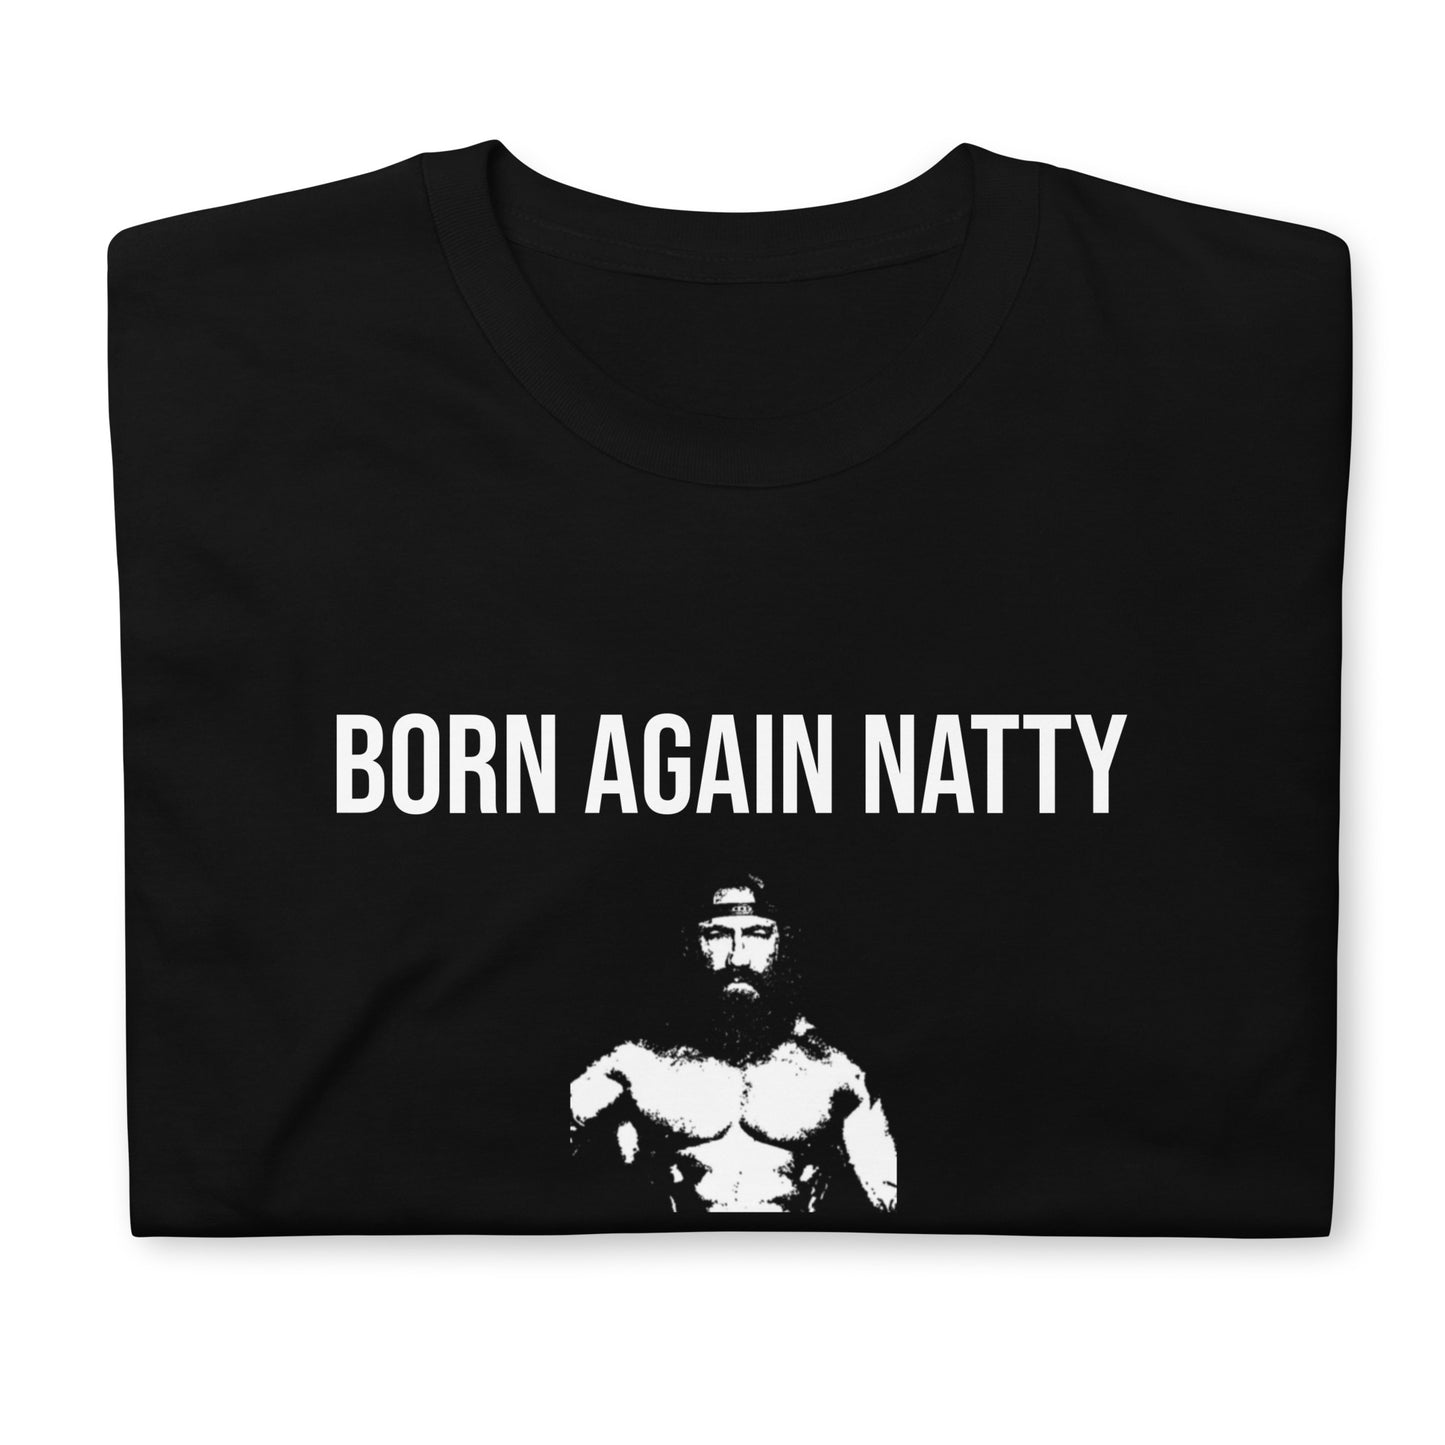 Born Again Natty!